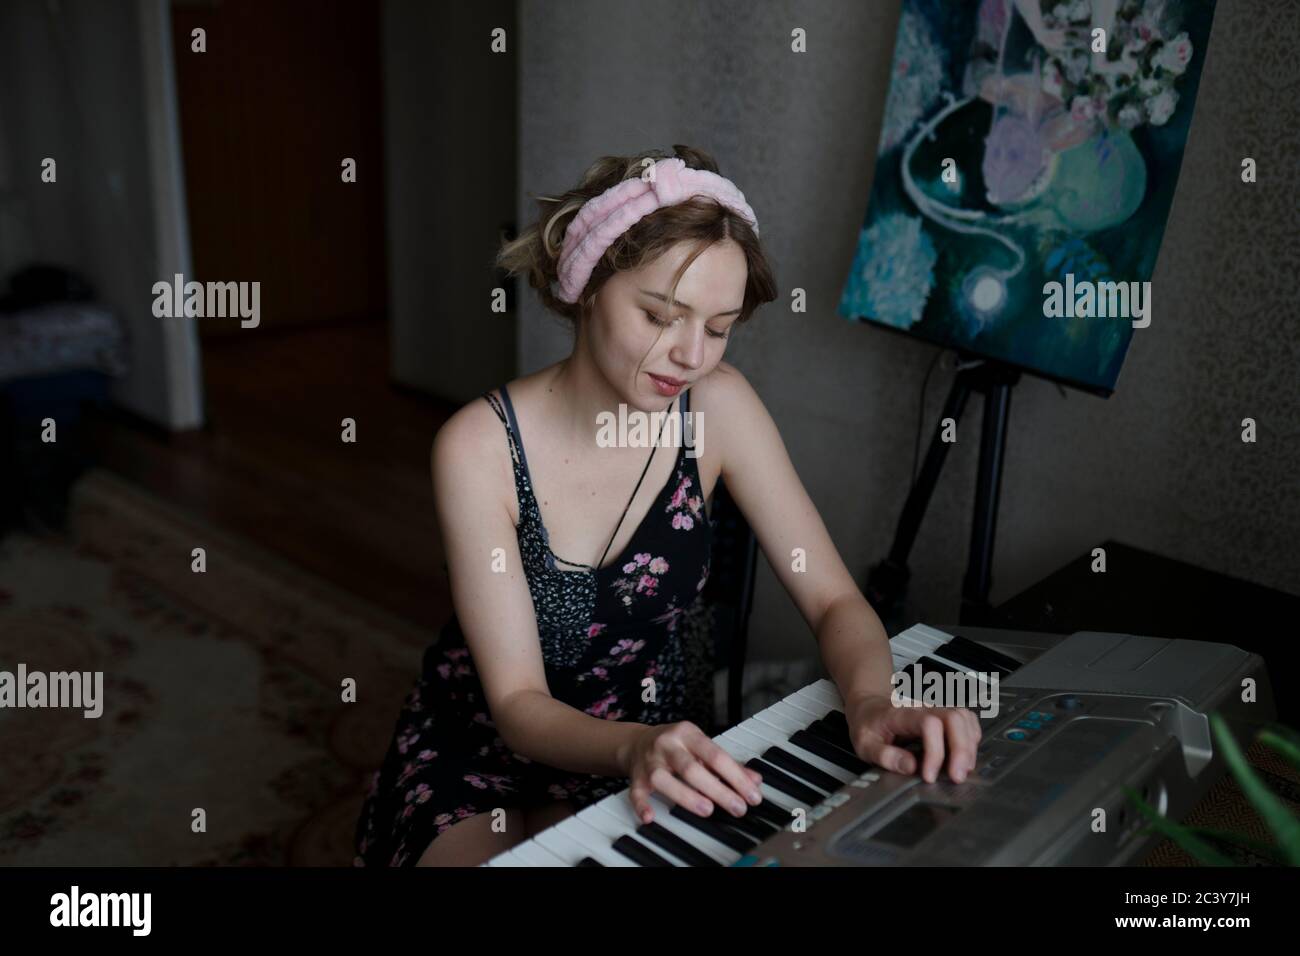 Woman playing keyboard at home Stock Photo